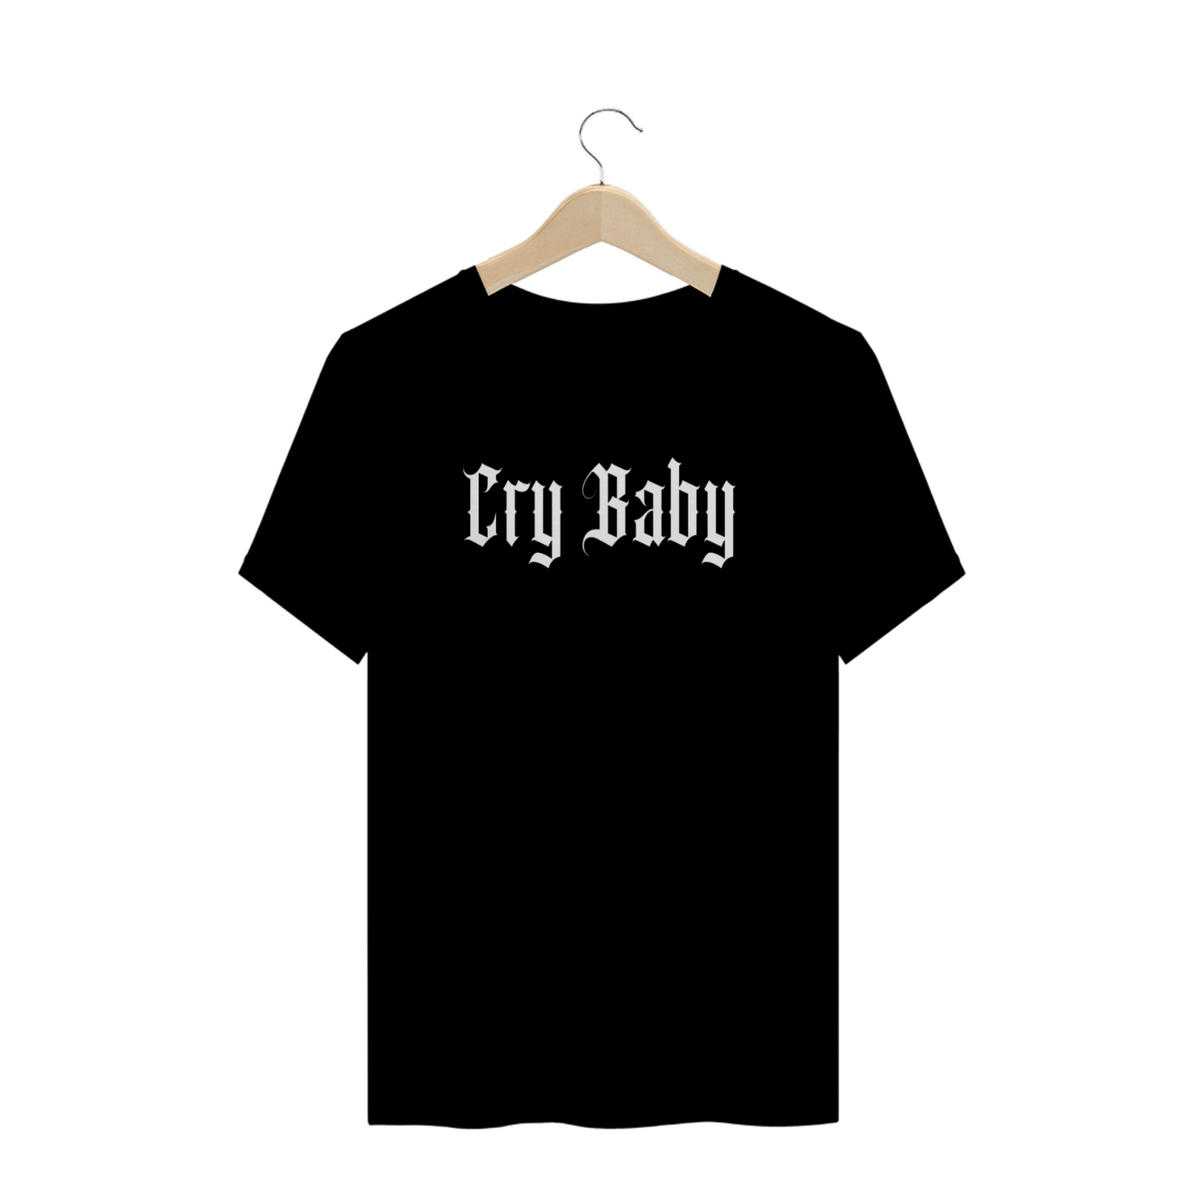 Nome do produto: Cry Baby Tradicional preta